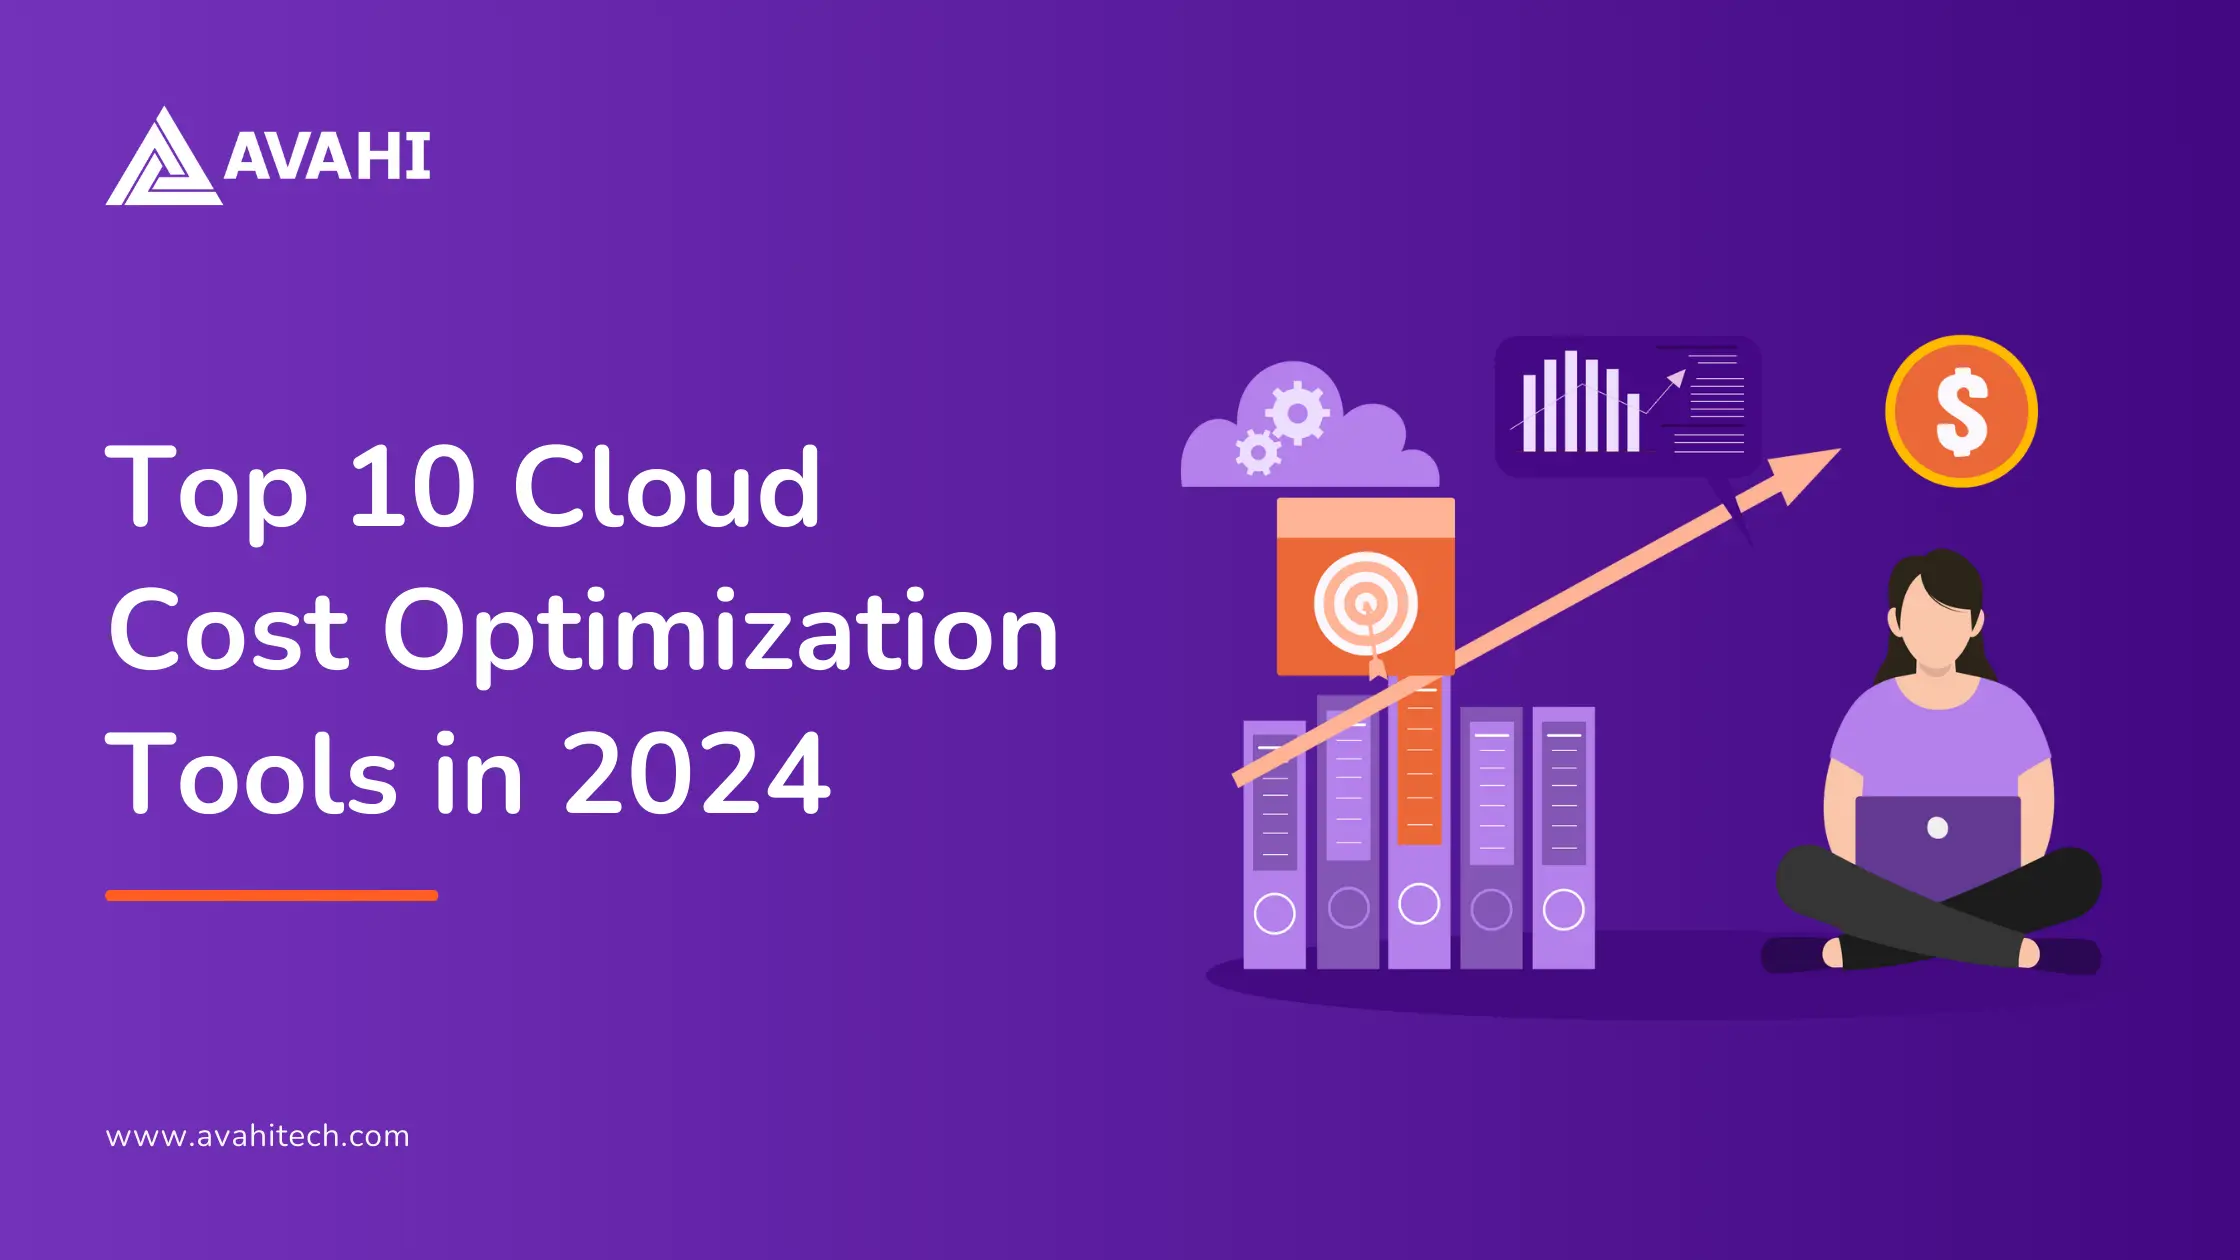 Top 10 Cloud Cost Optimization Tools in 2024